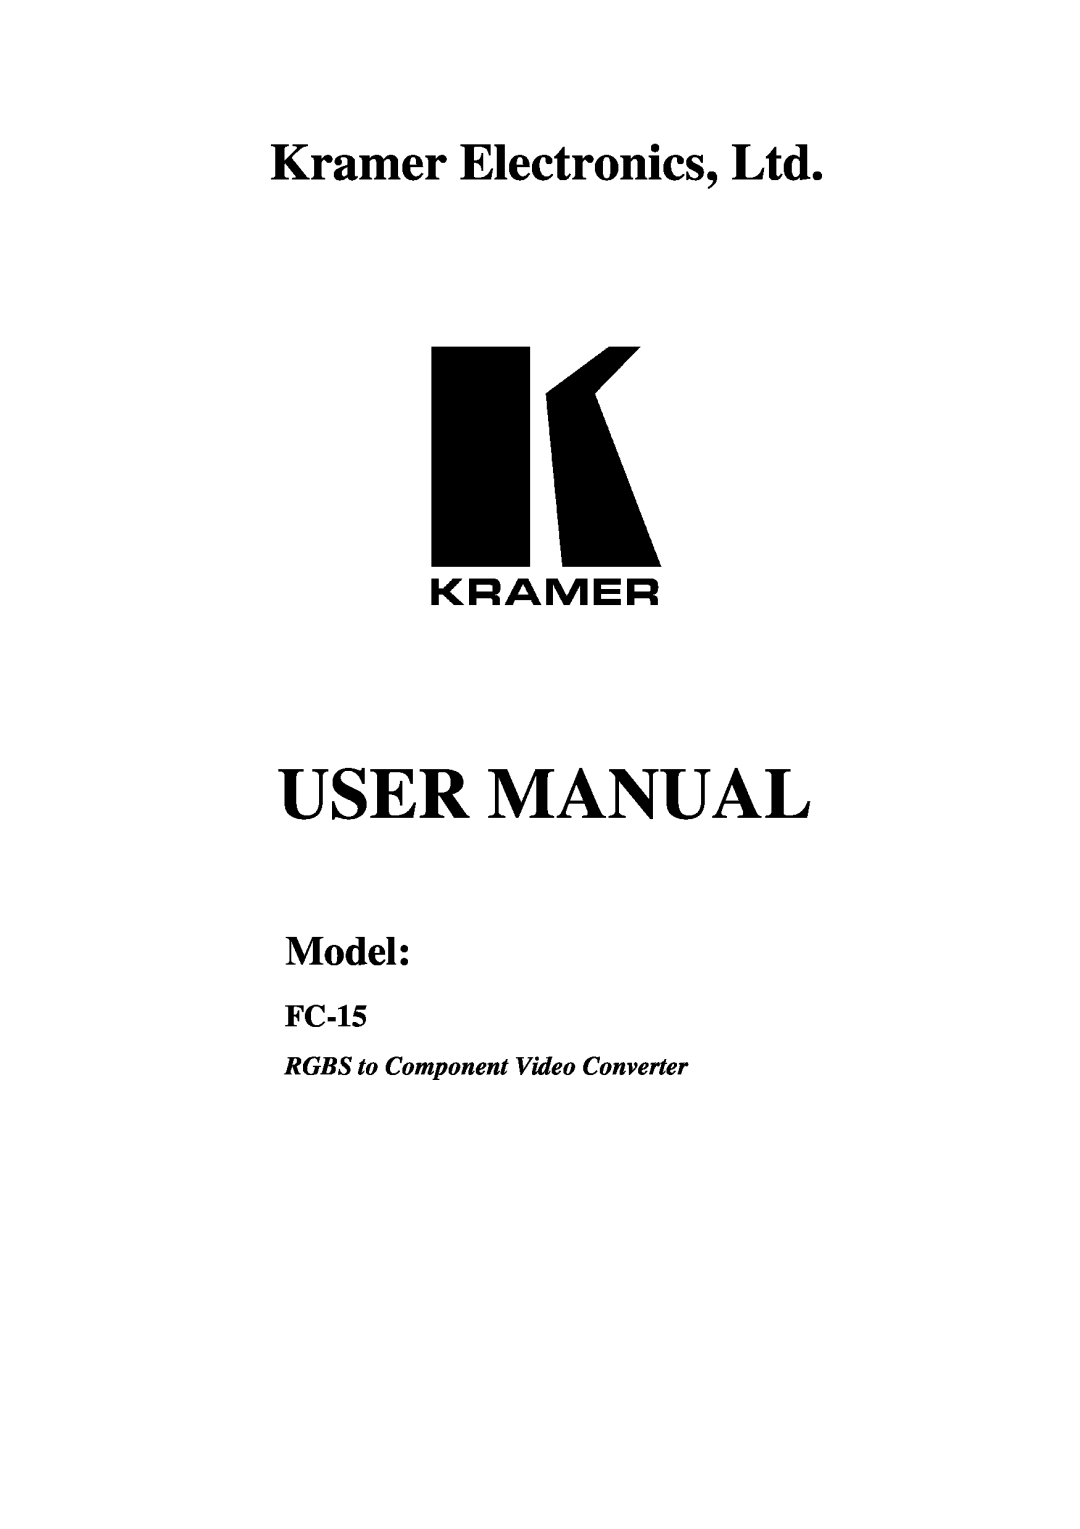 Kramer Electronics FC-15 user manual User Manual, Model, RGBS to Component Video Converter 